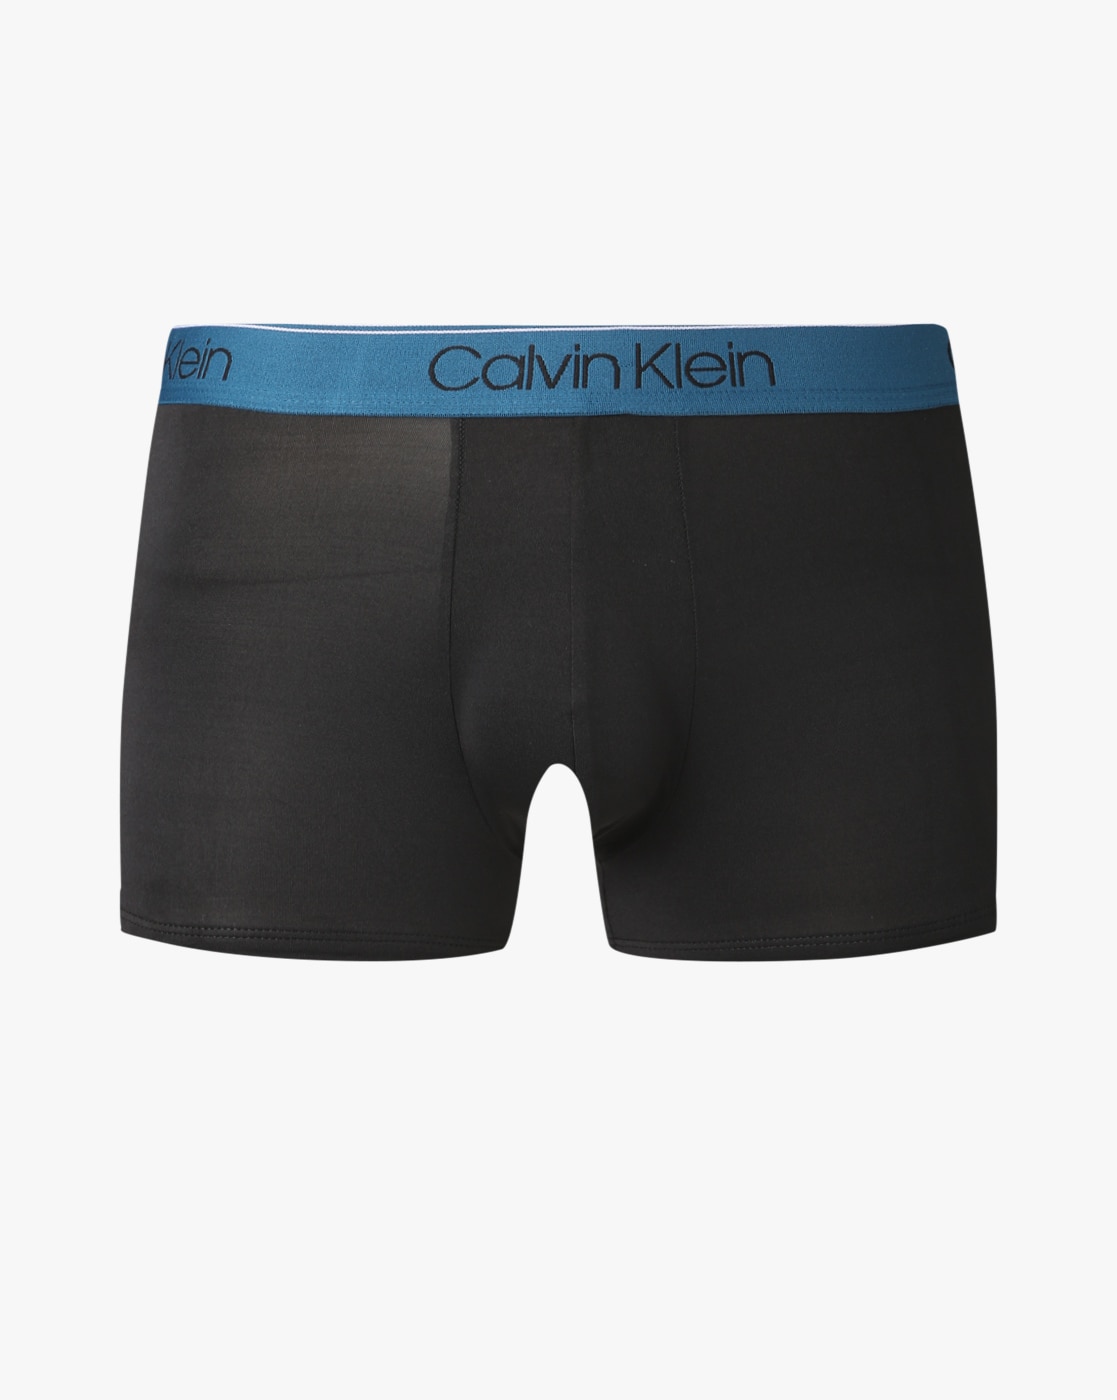 Buy Black Trunks for Men by Calvin Klein Underwear Online